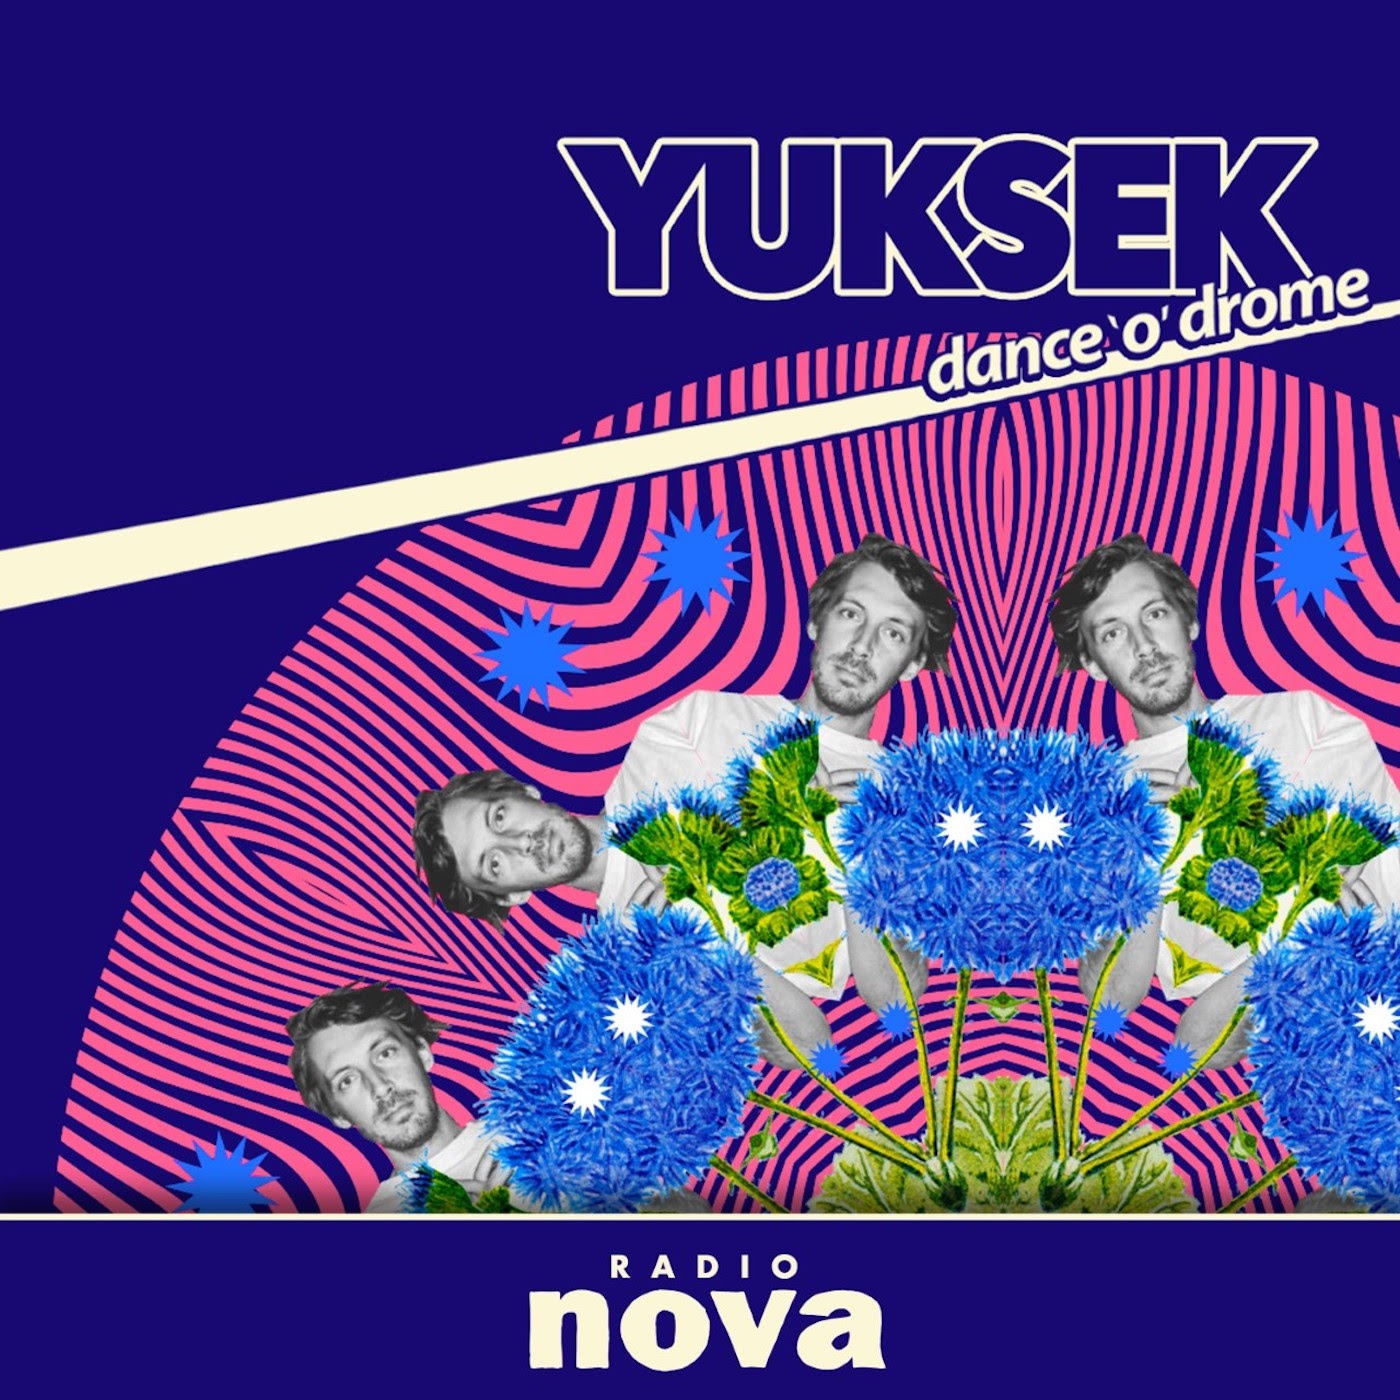 « Dance’o’drome »  #1 : le mix de Yuksek, avec DJ Tennis, sur Radio Nova